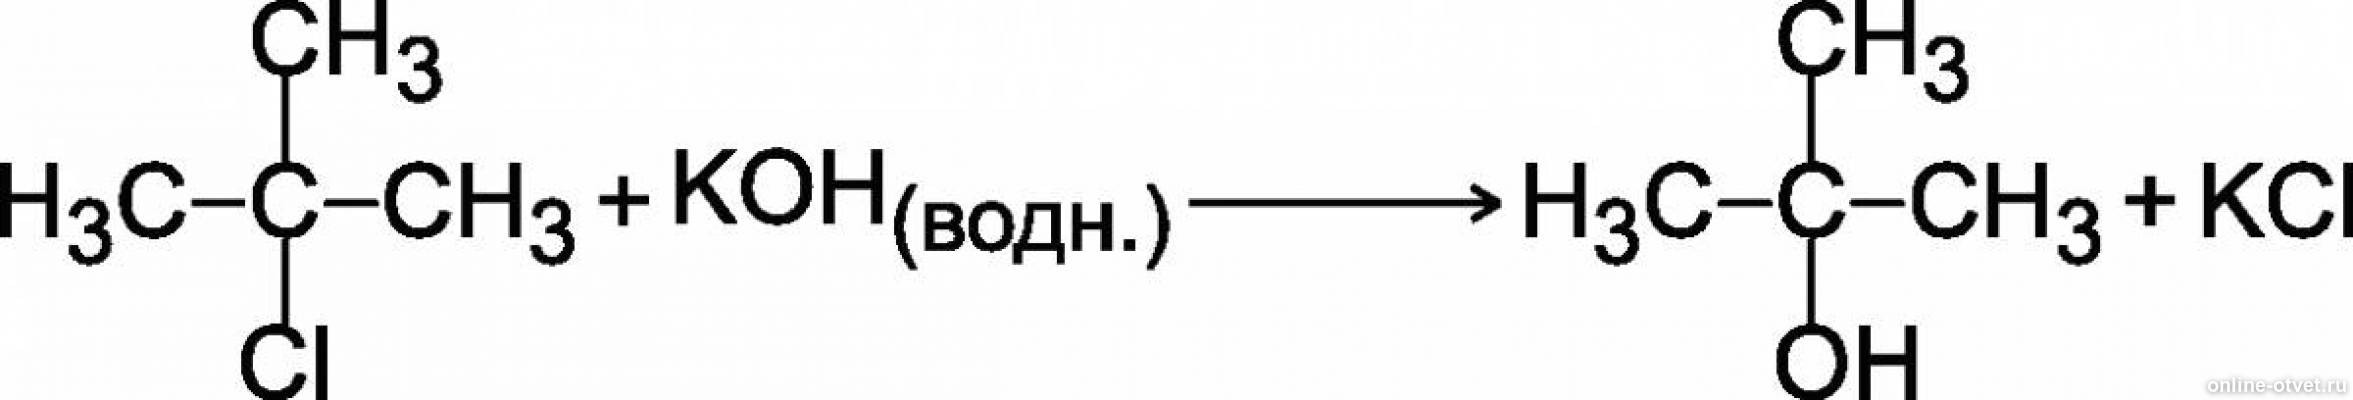 Дихлорпропан гидроксид калия. 2 Метилпропан и хлор реакция. 2 Хлор 2 метилпропан NAOH. NAOH спиртовой раствор реакции.